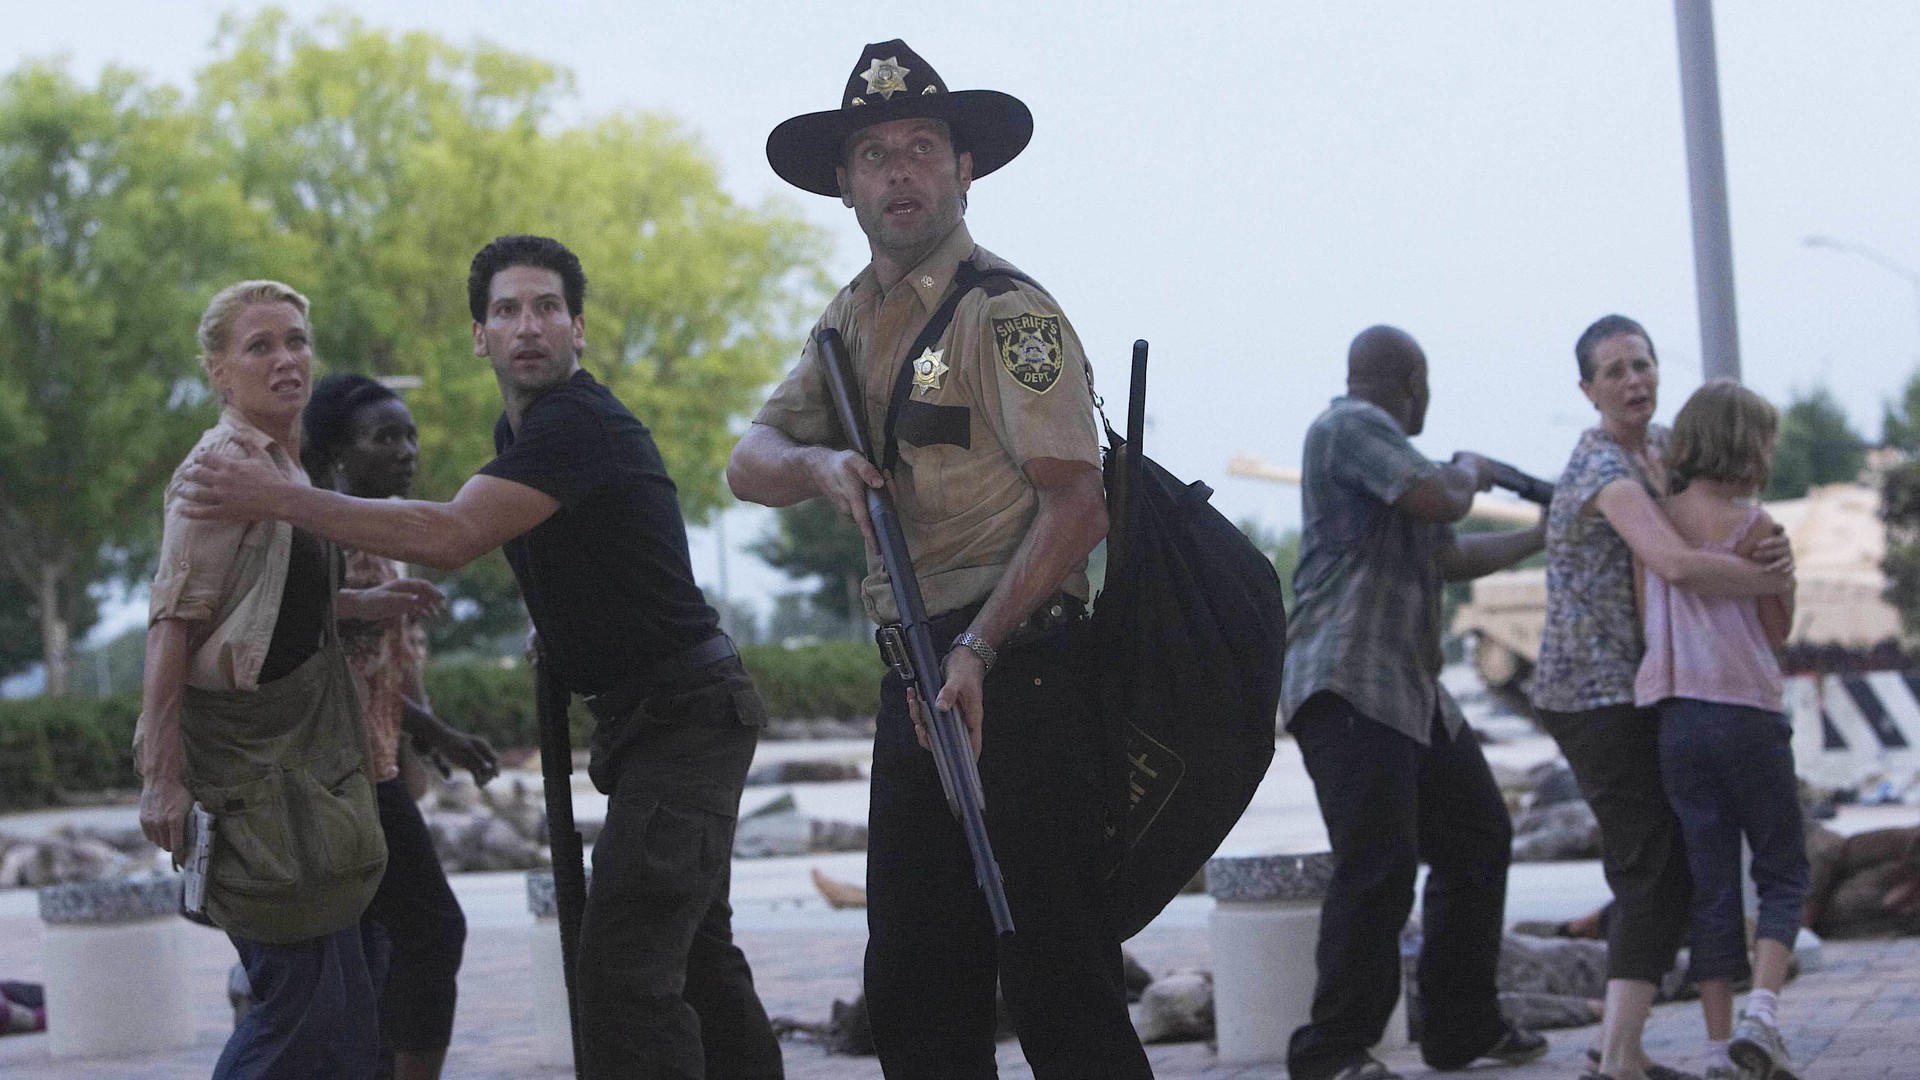 The Walking Dead background